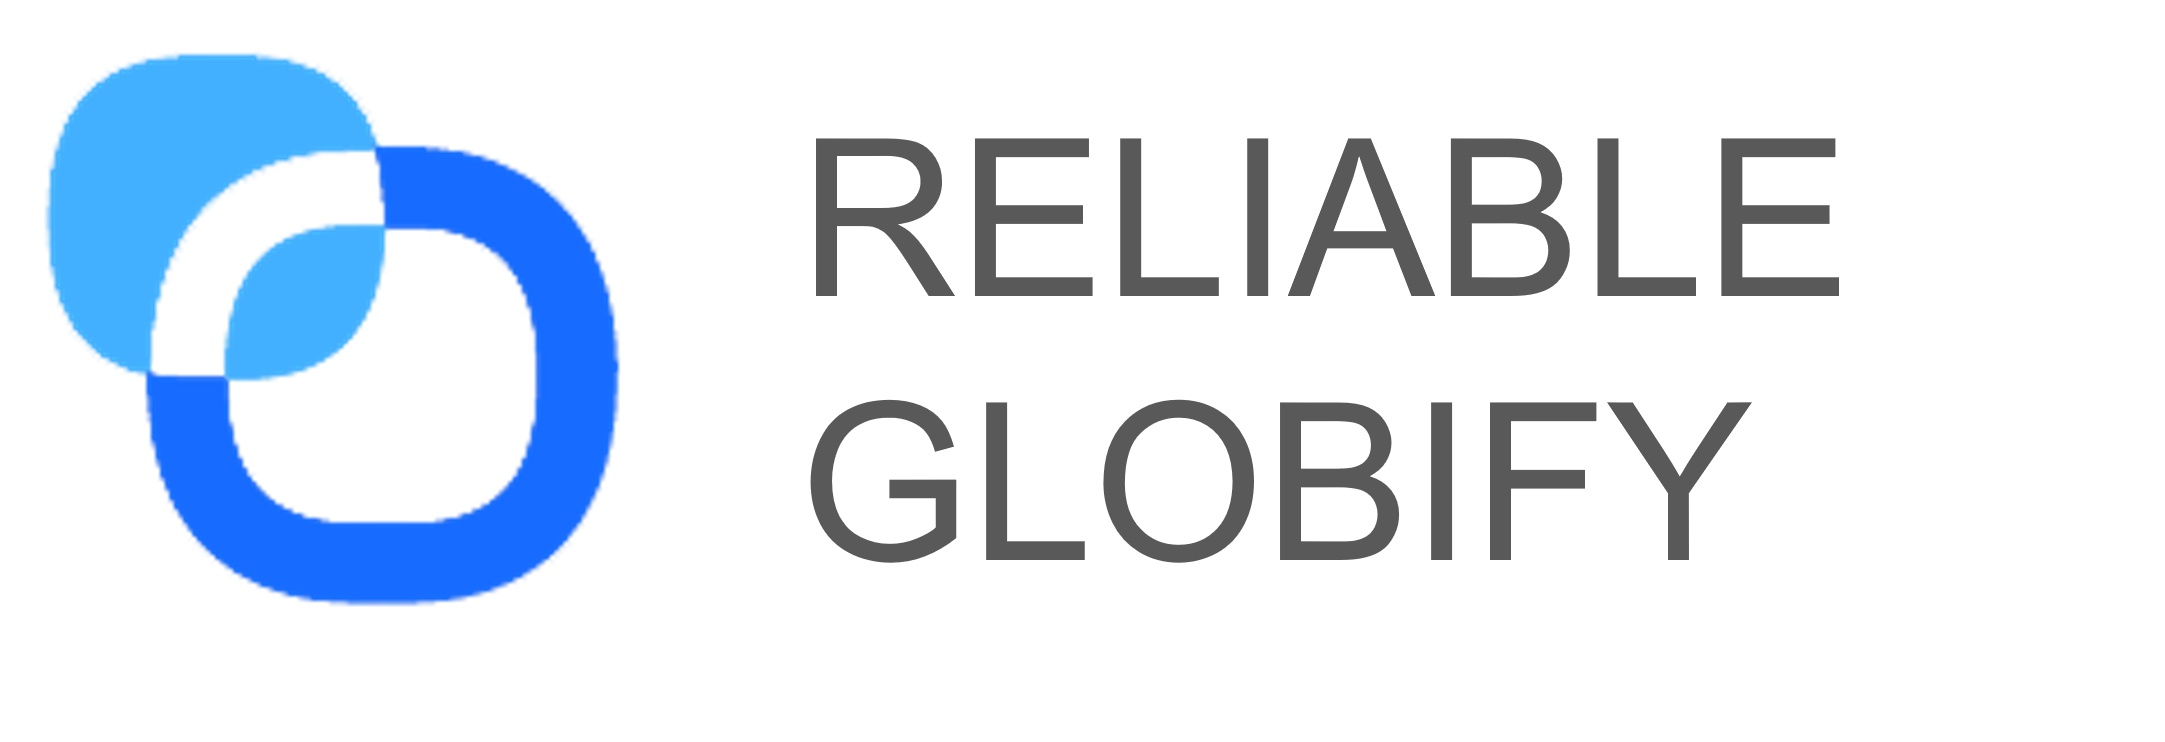 Reliable Globify Logo